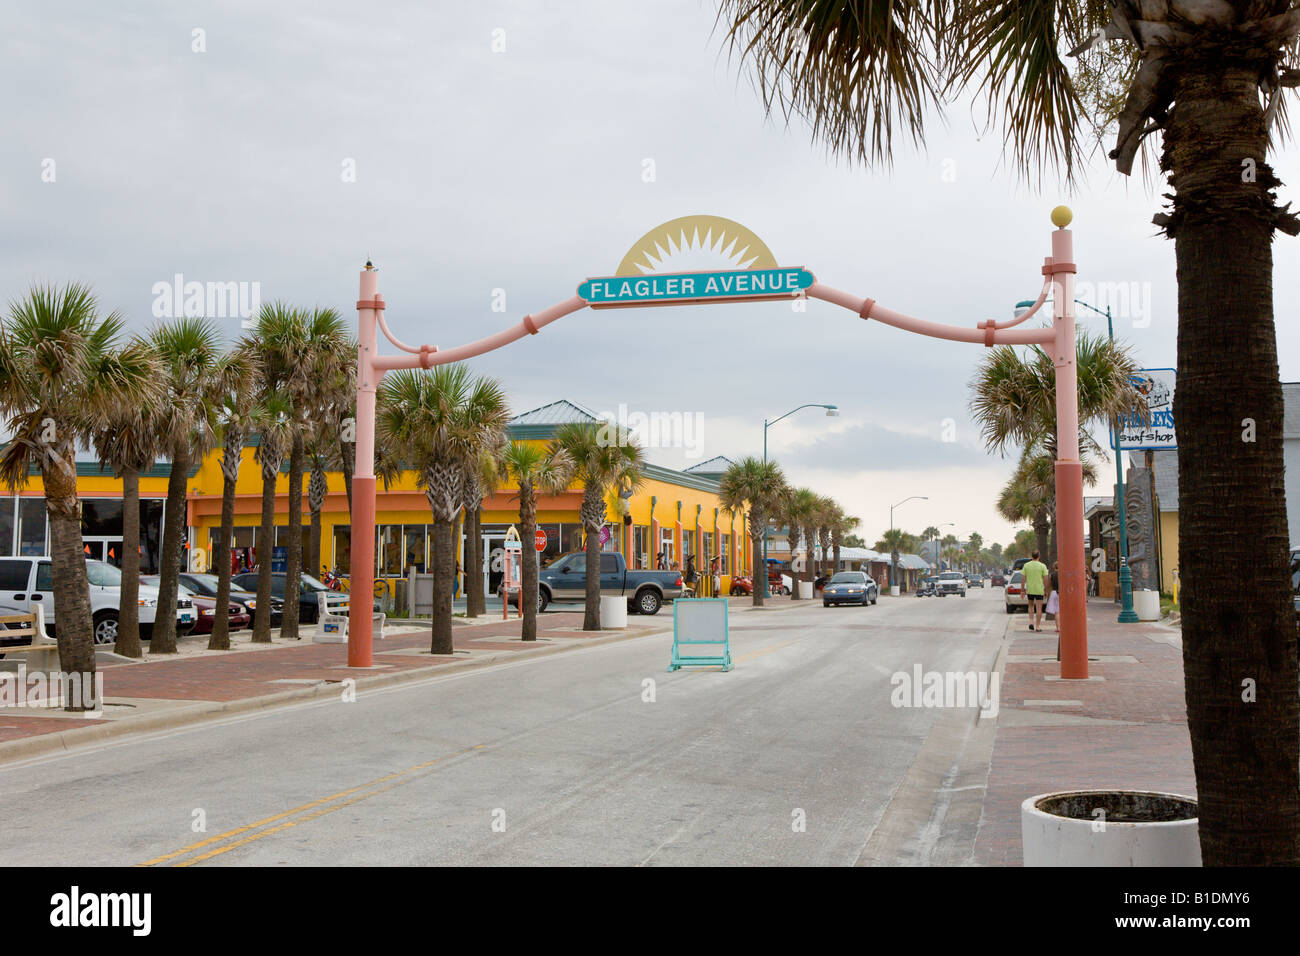 Flagler Avenue Street Sign Near Atlantic Ocean Beach Access In New Smyrna Beach Florida Stock Photo Alamy